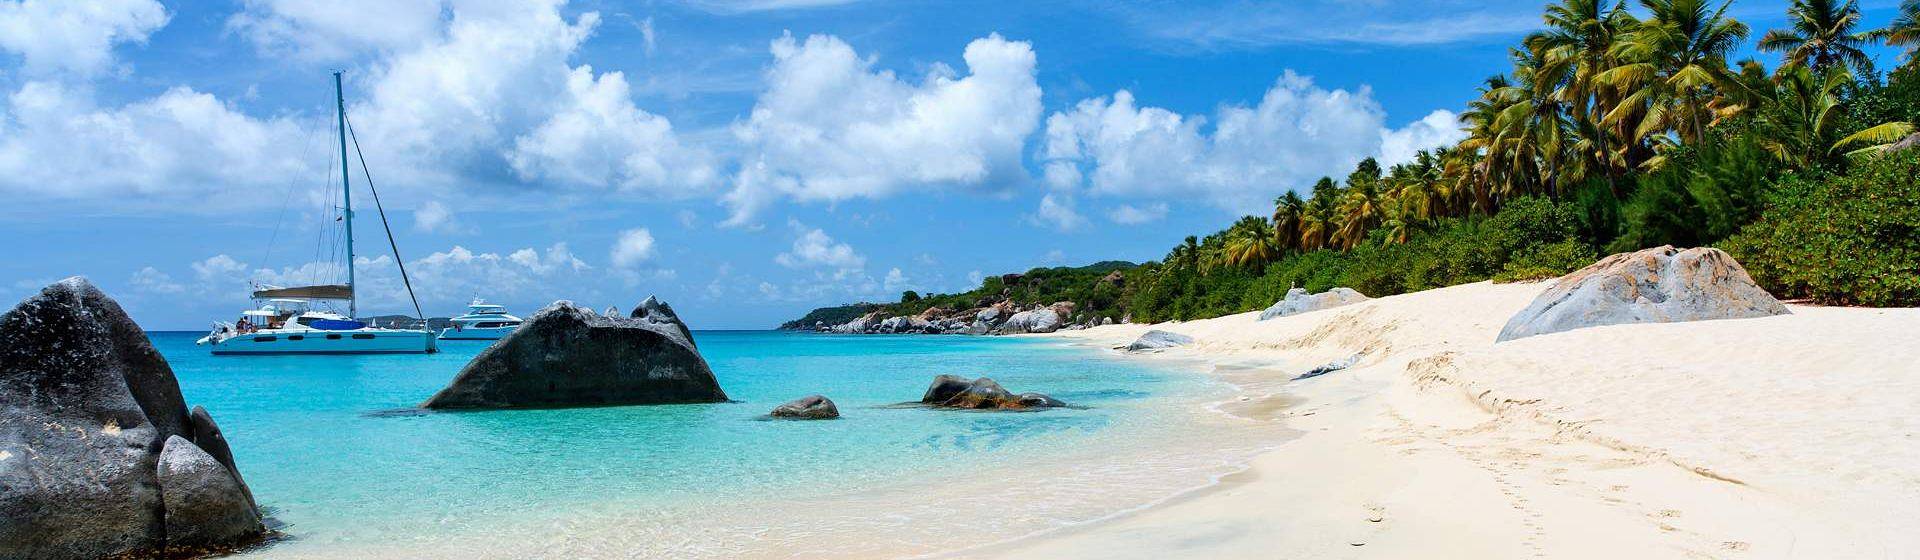 Holidays to British Virgin Islands Image